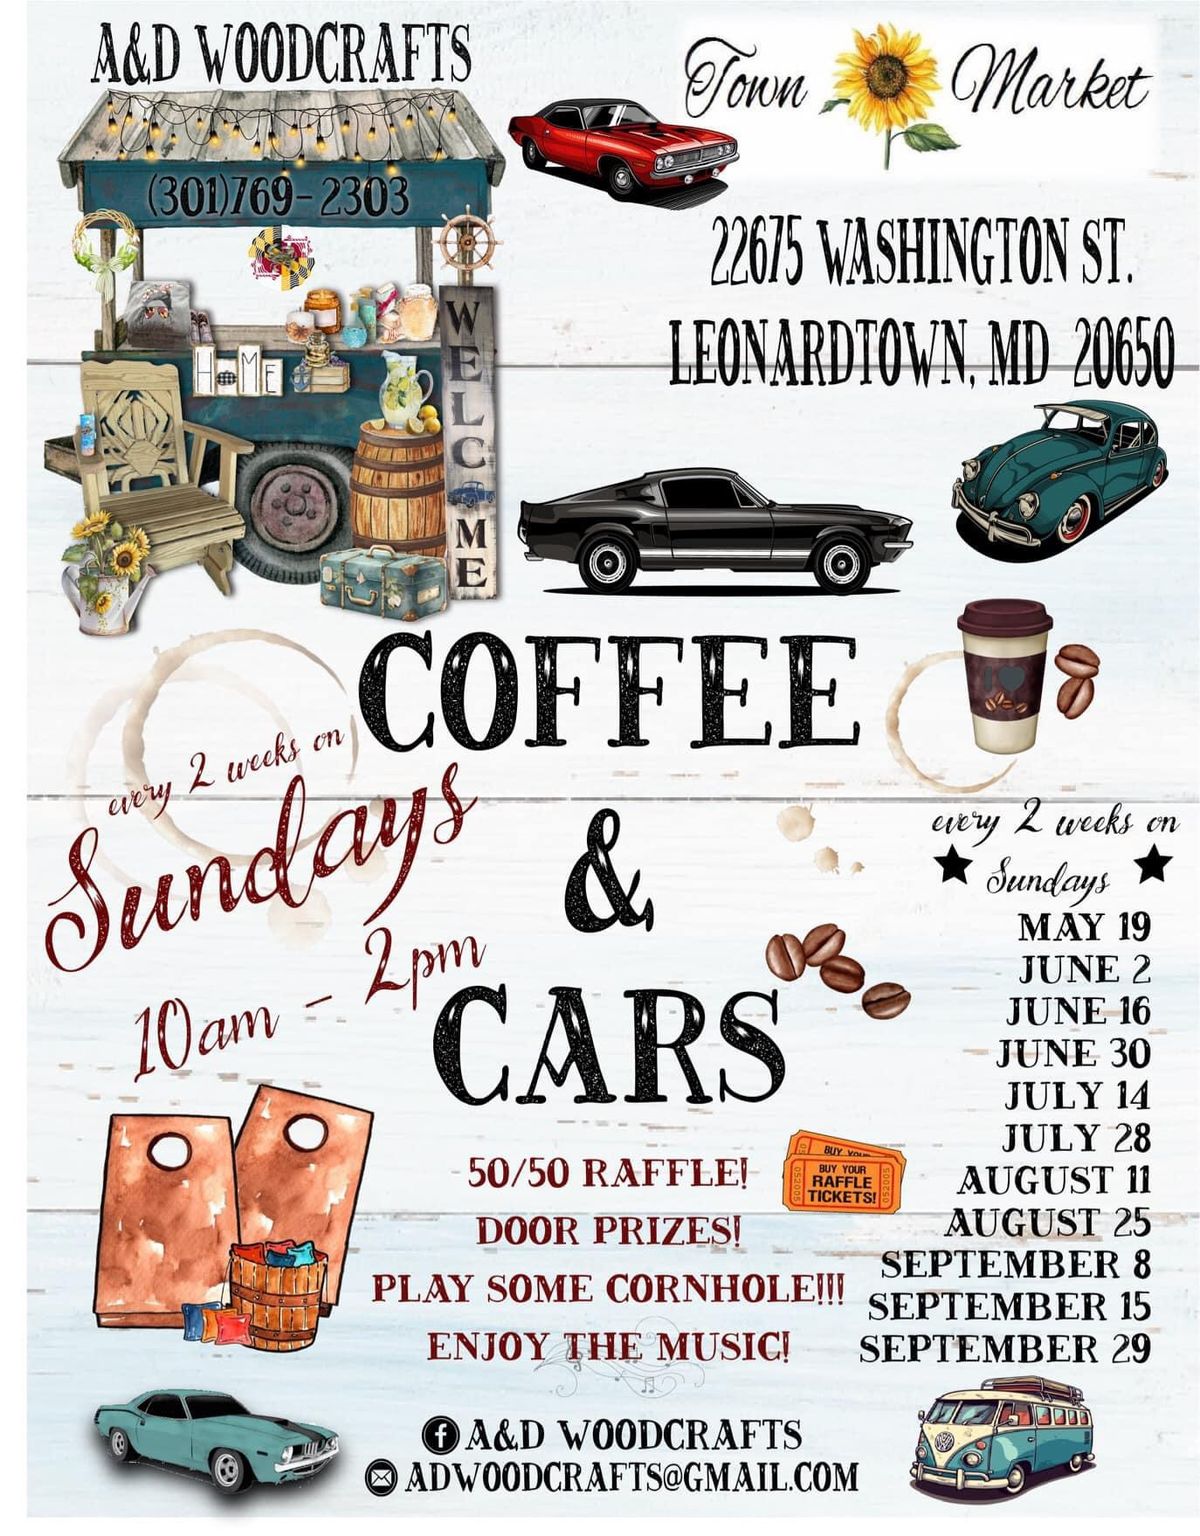 Cars & Coffee Car Show